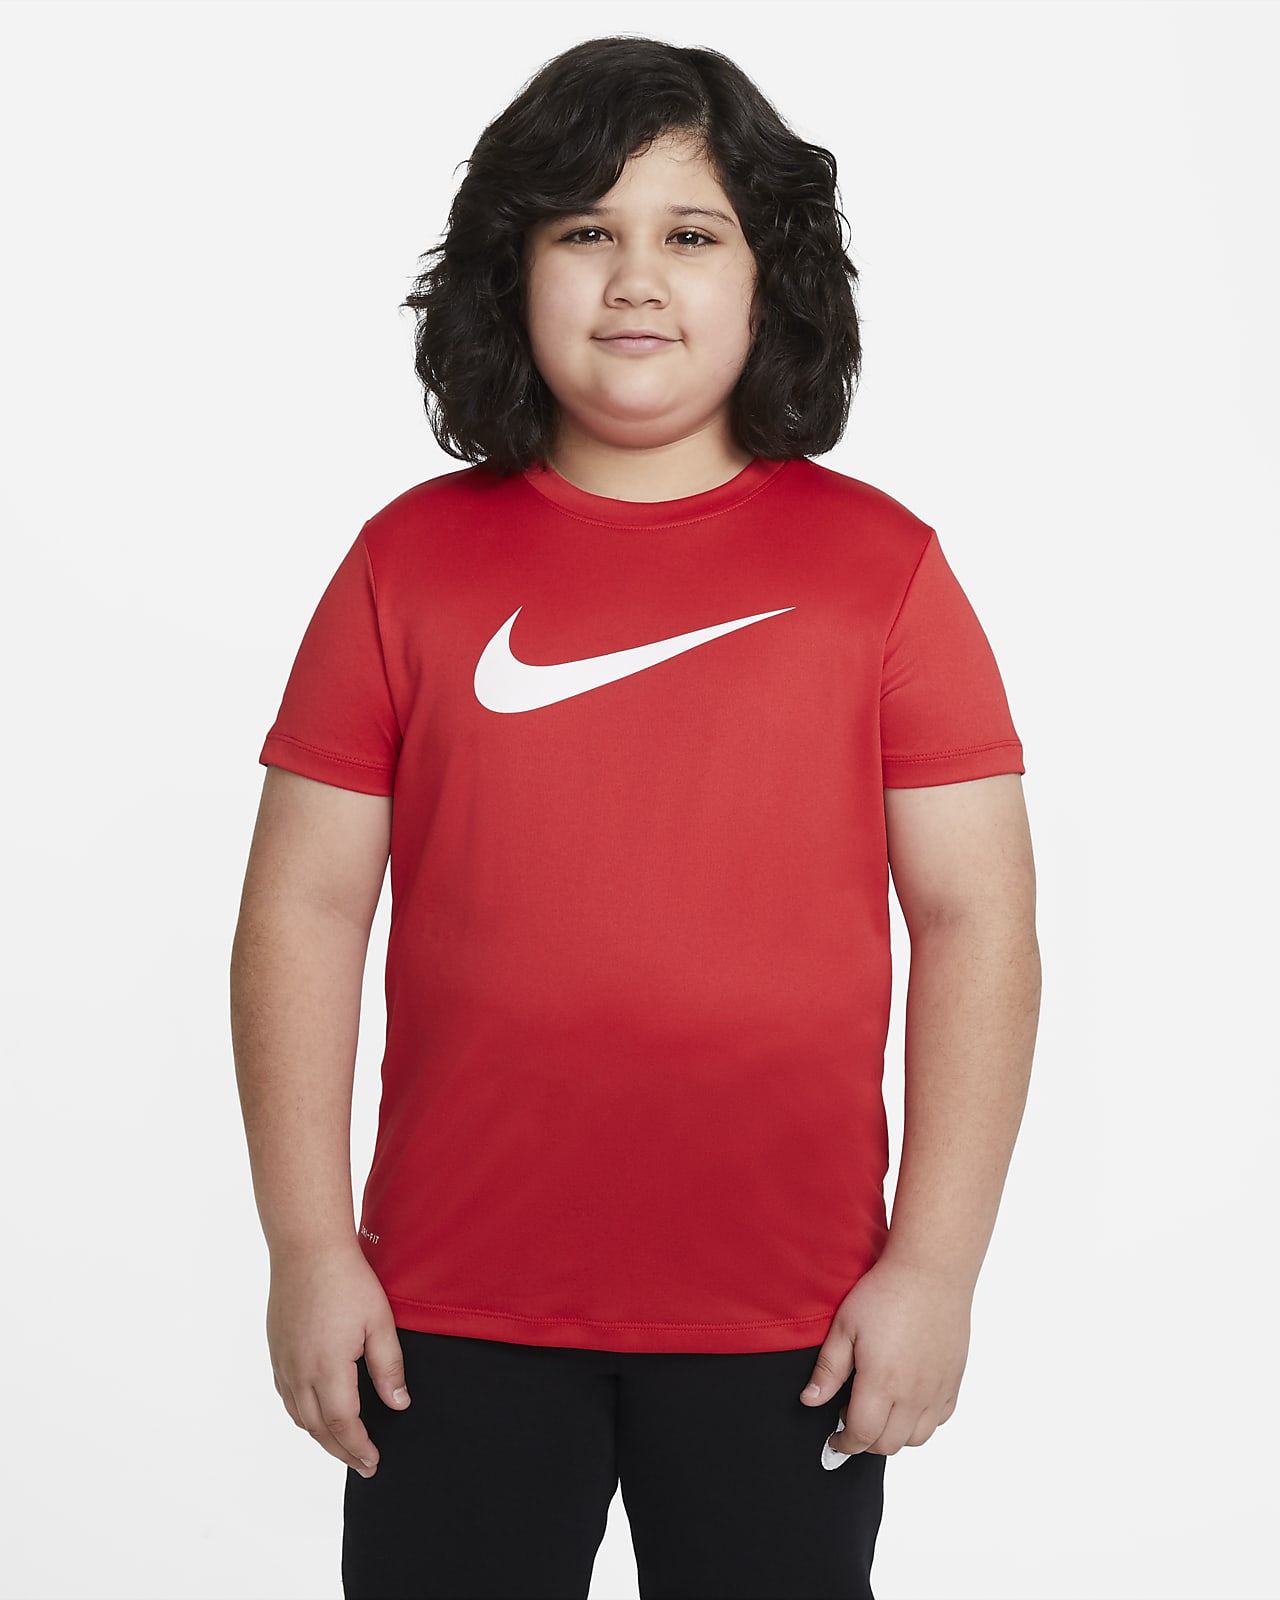 Playera de entrenamiento para niño talla grande Nike Dri-FIT (talla extendida)